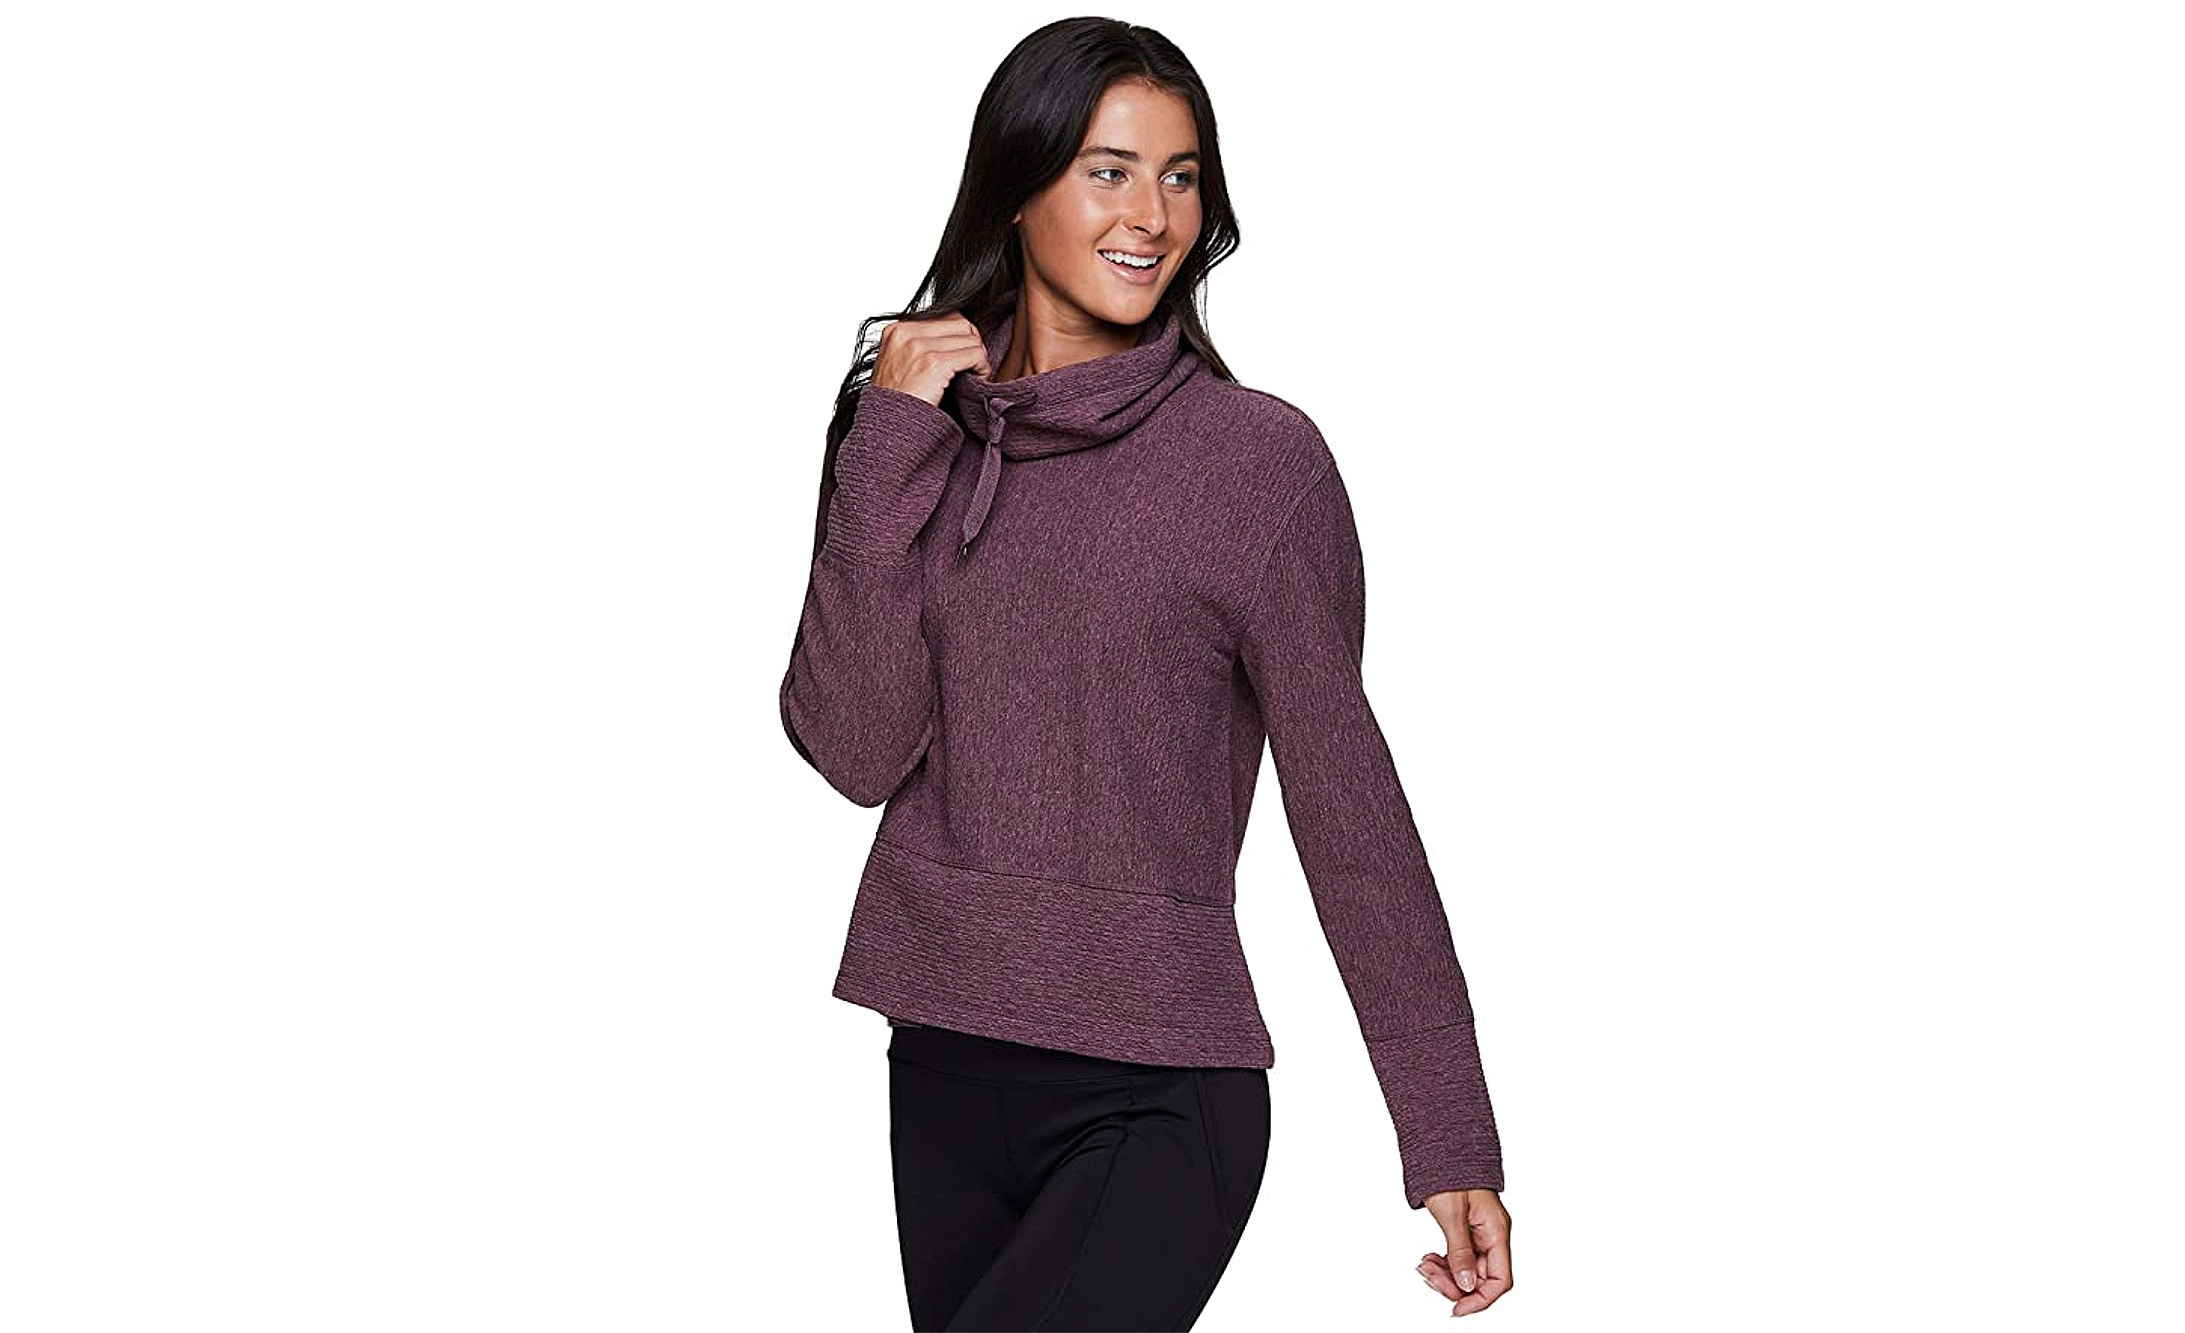 RBX Women's Activewear Pullover S/S Shirt Top NWT Size Medium M Pale Purple  $38